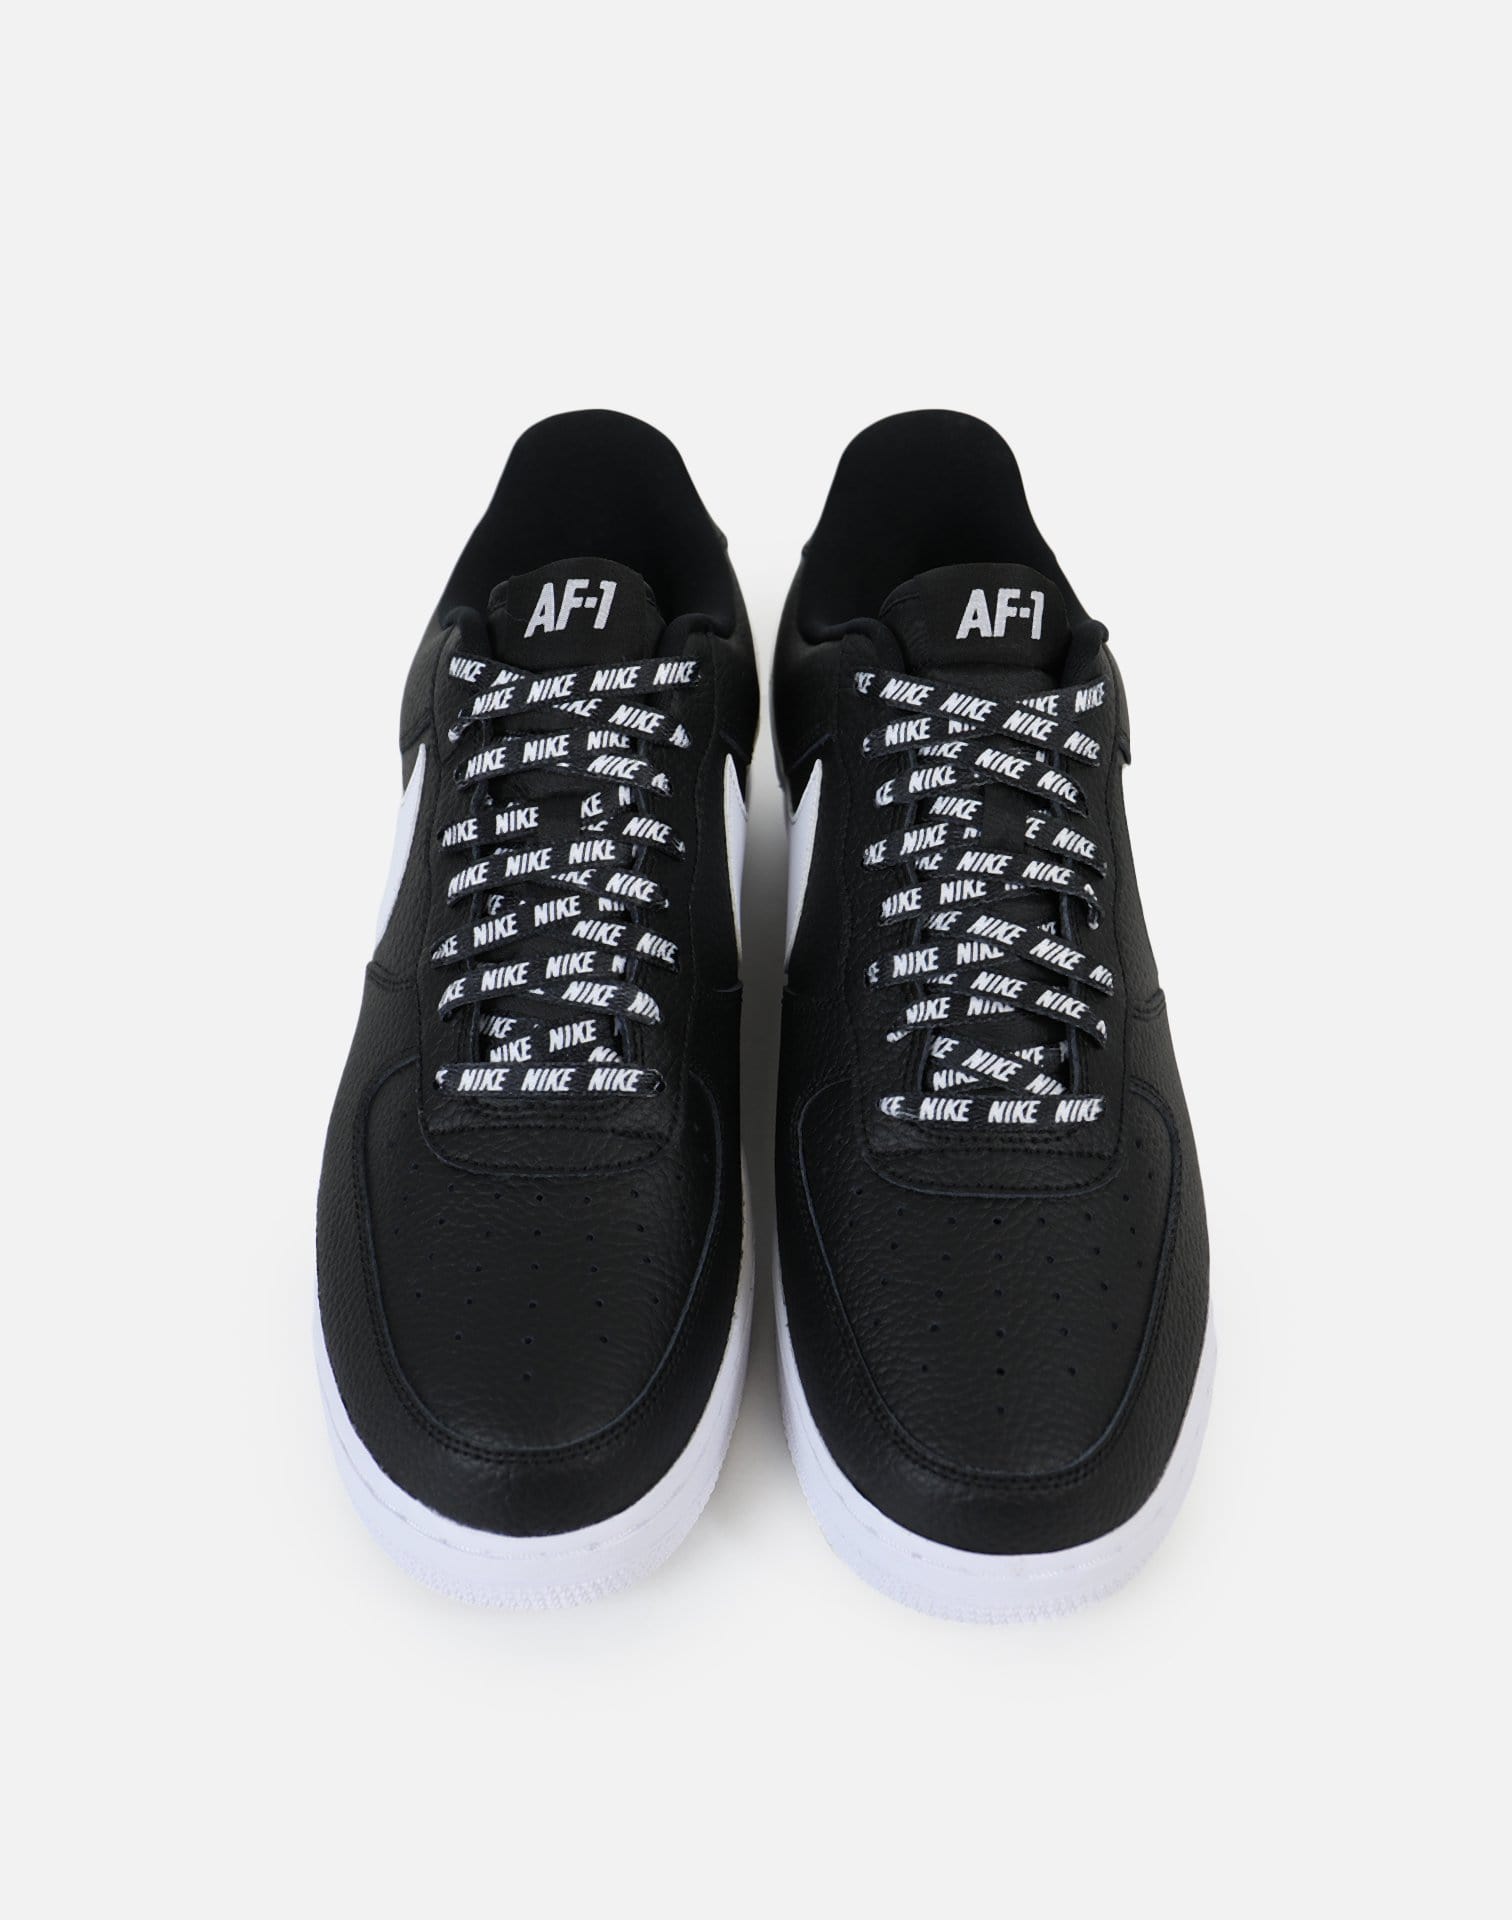 Nike Air Force 1 Low NBA Black White, 823511-007